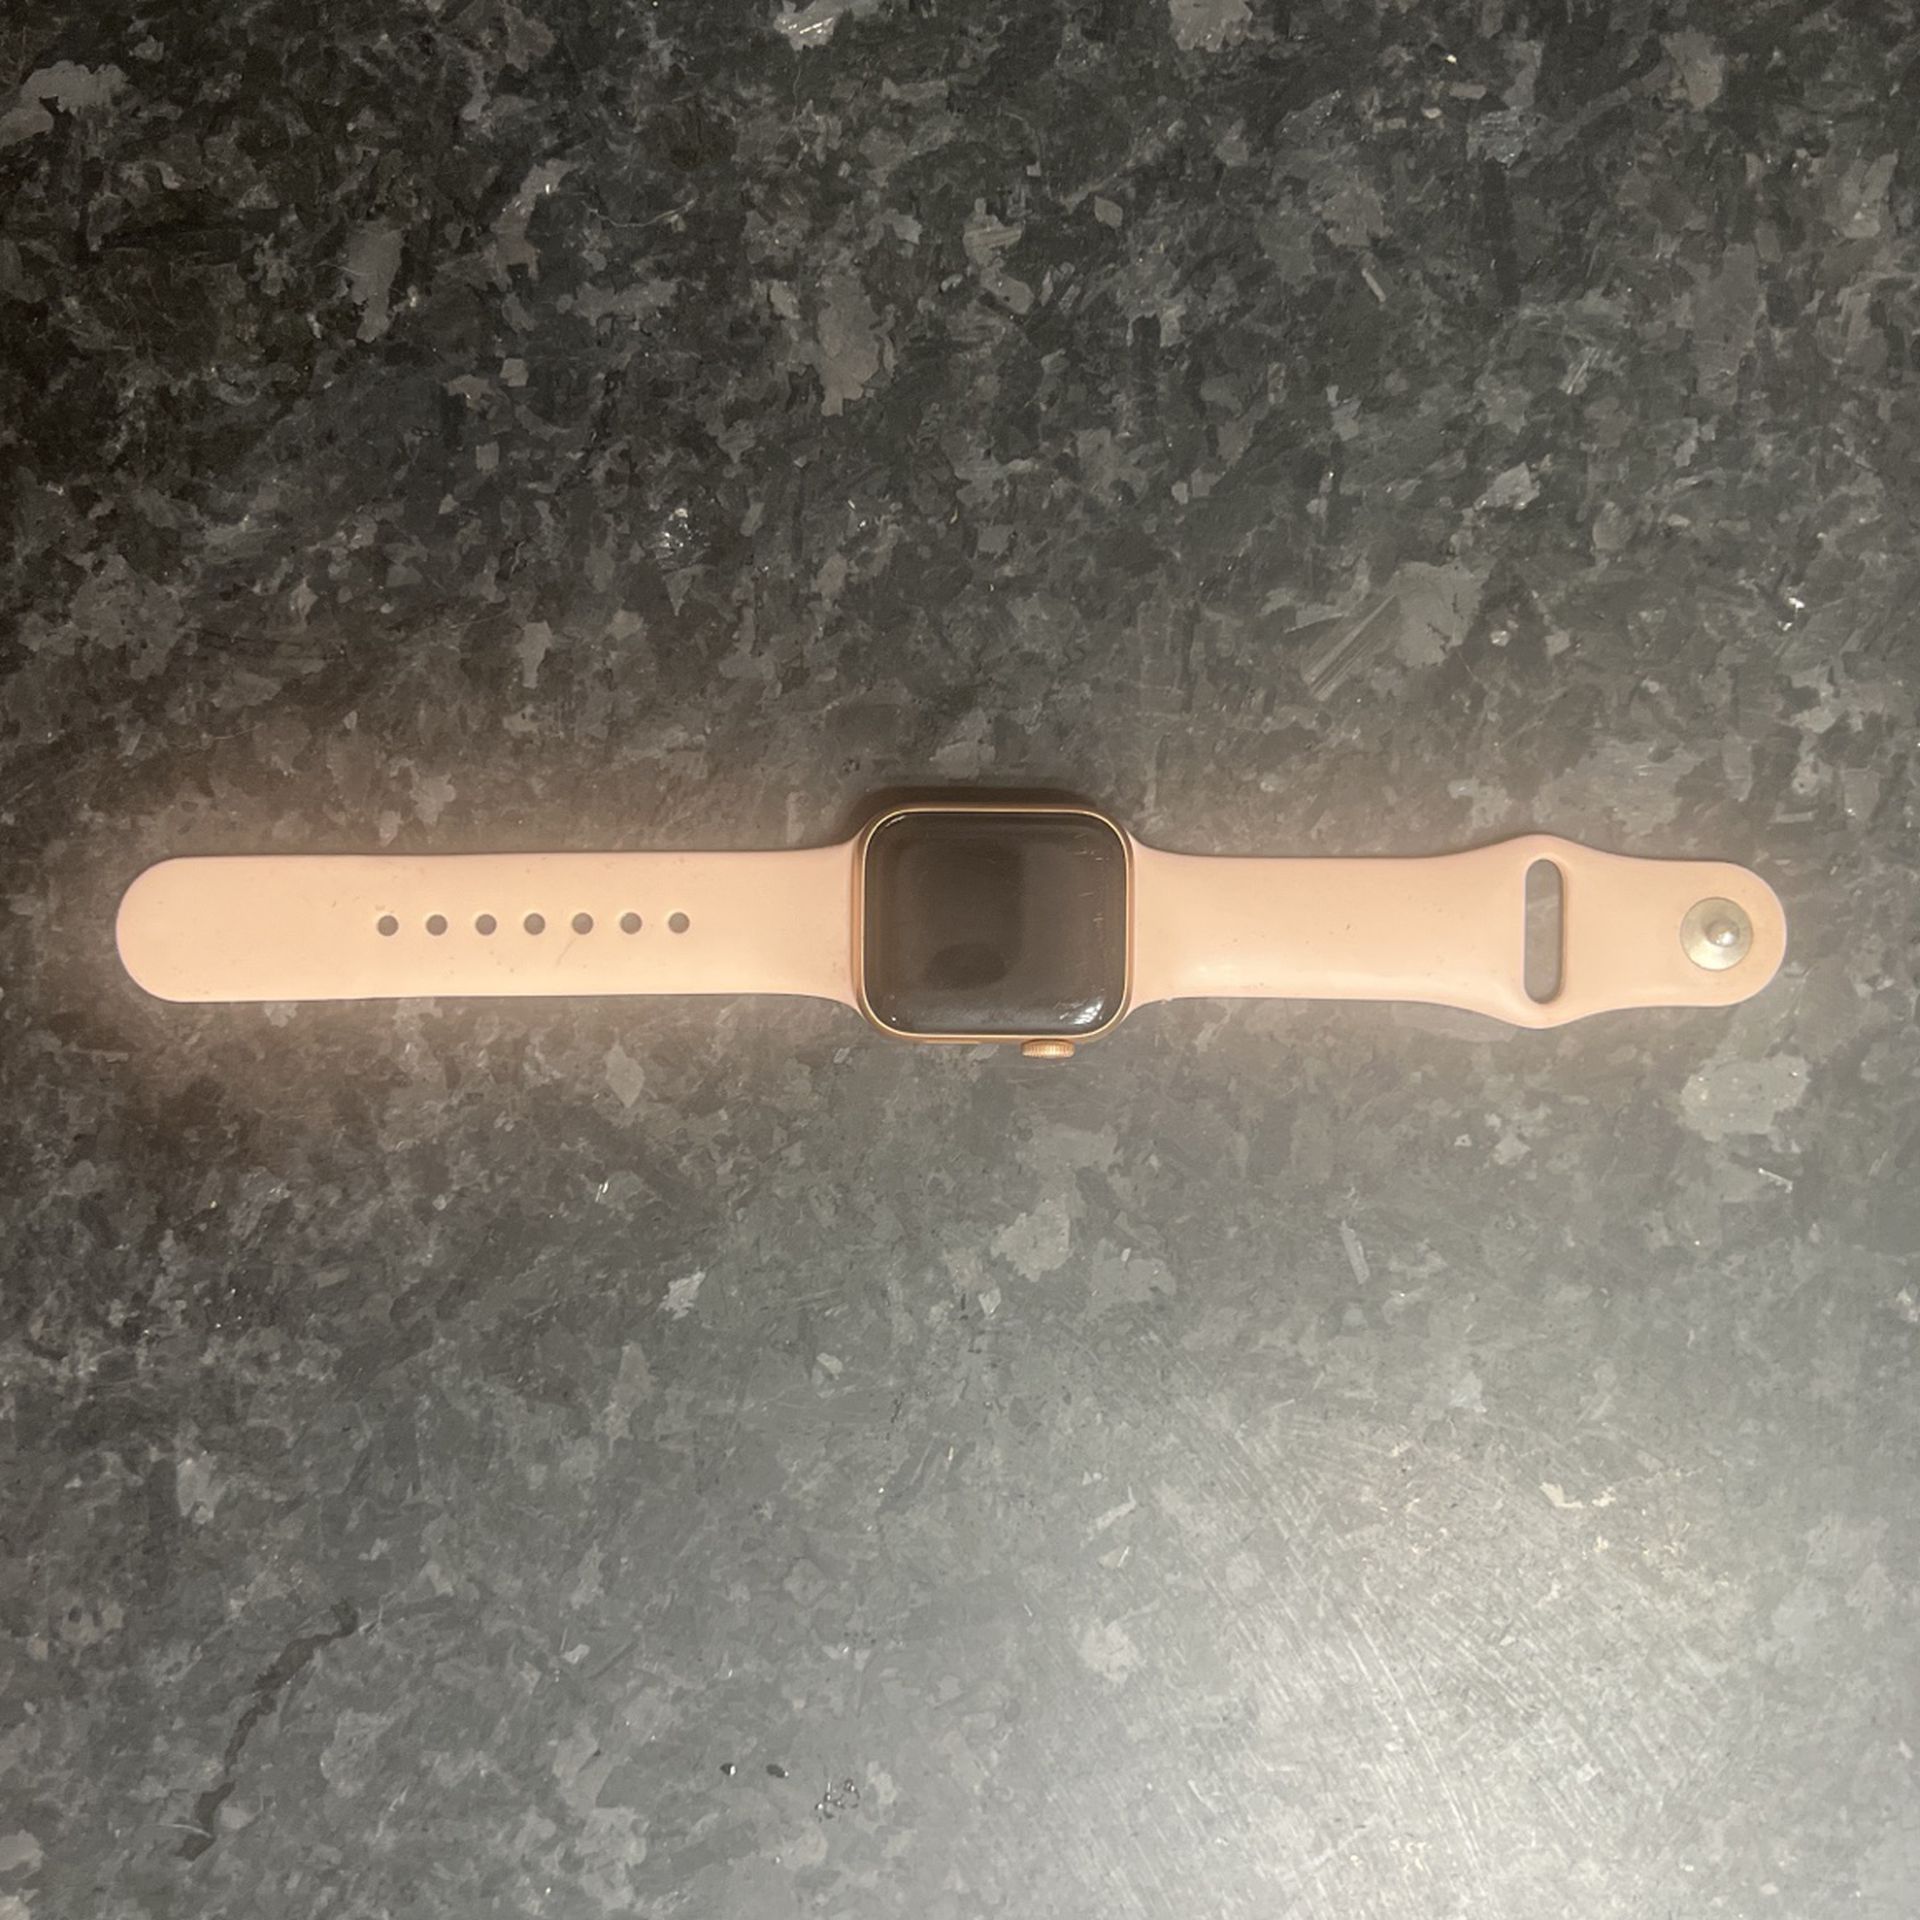 40mm Apple Watch SE (rose gold)